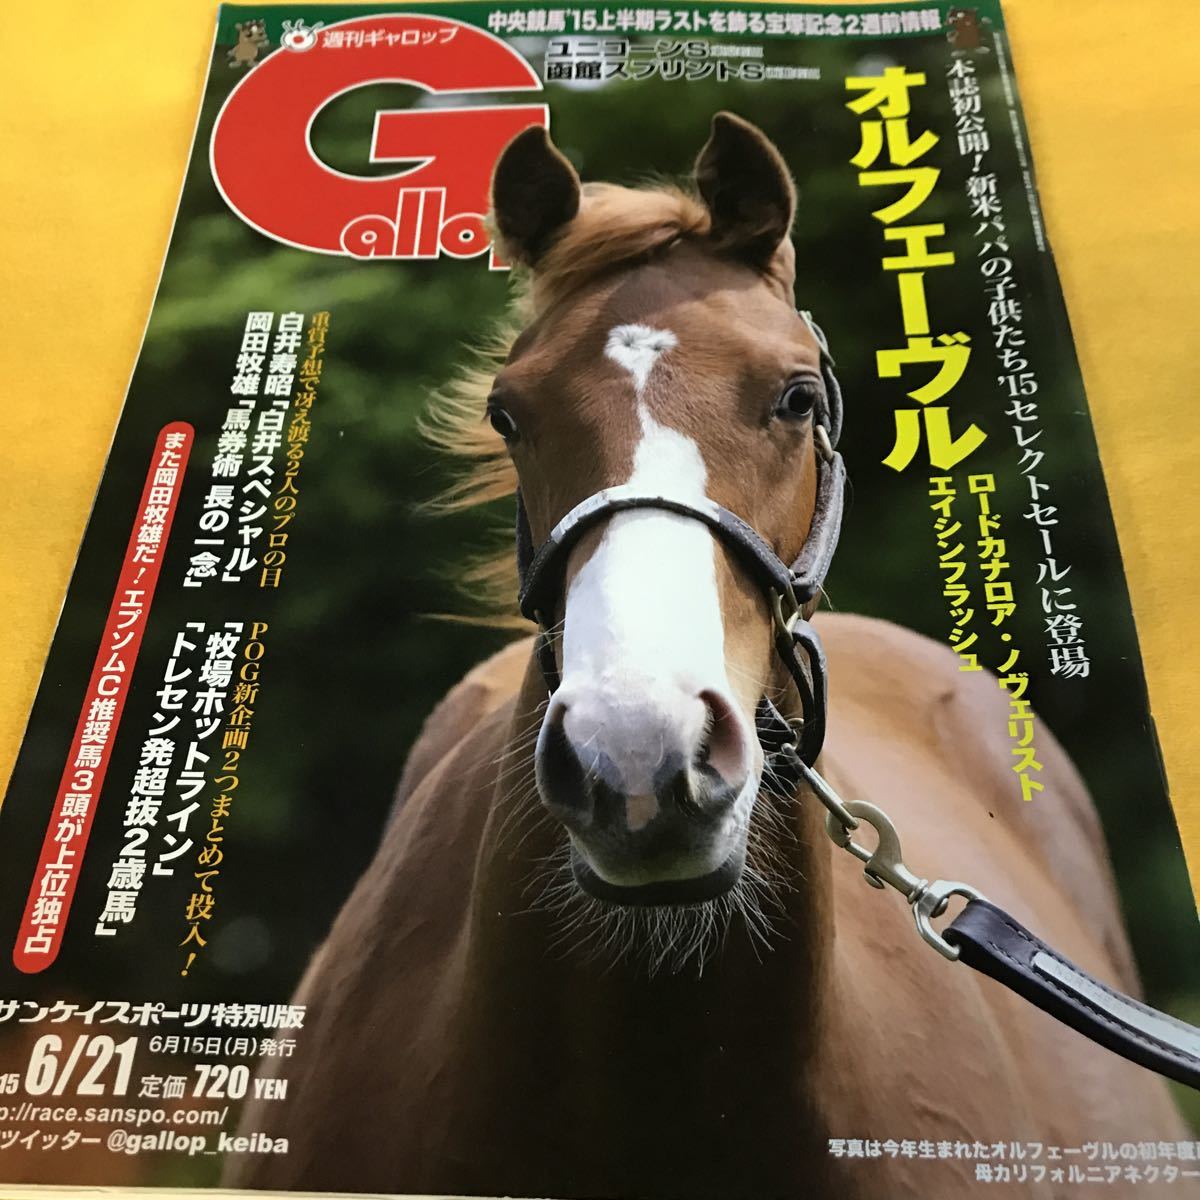 [ horse racing ]Gallop weekly gyarop(2015.6.21)2015 select sale (oru Feve ru, load kana lower )| Okabe . male |eisin hikari 